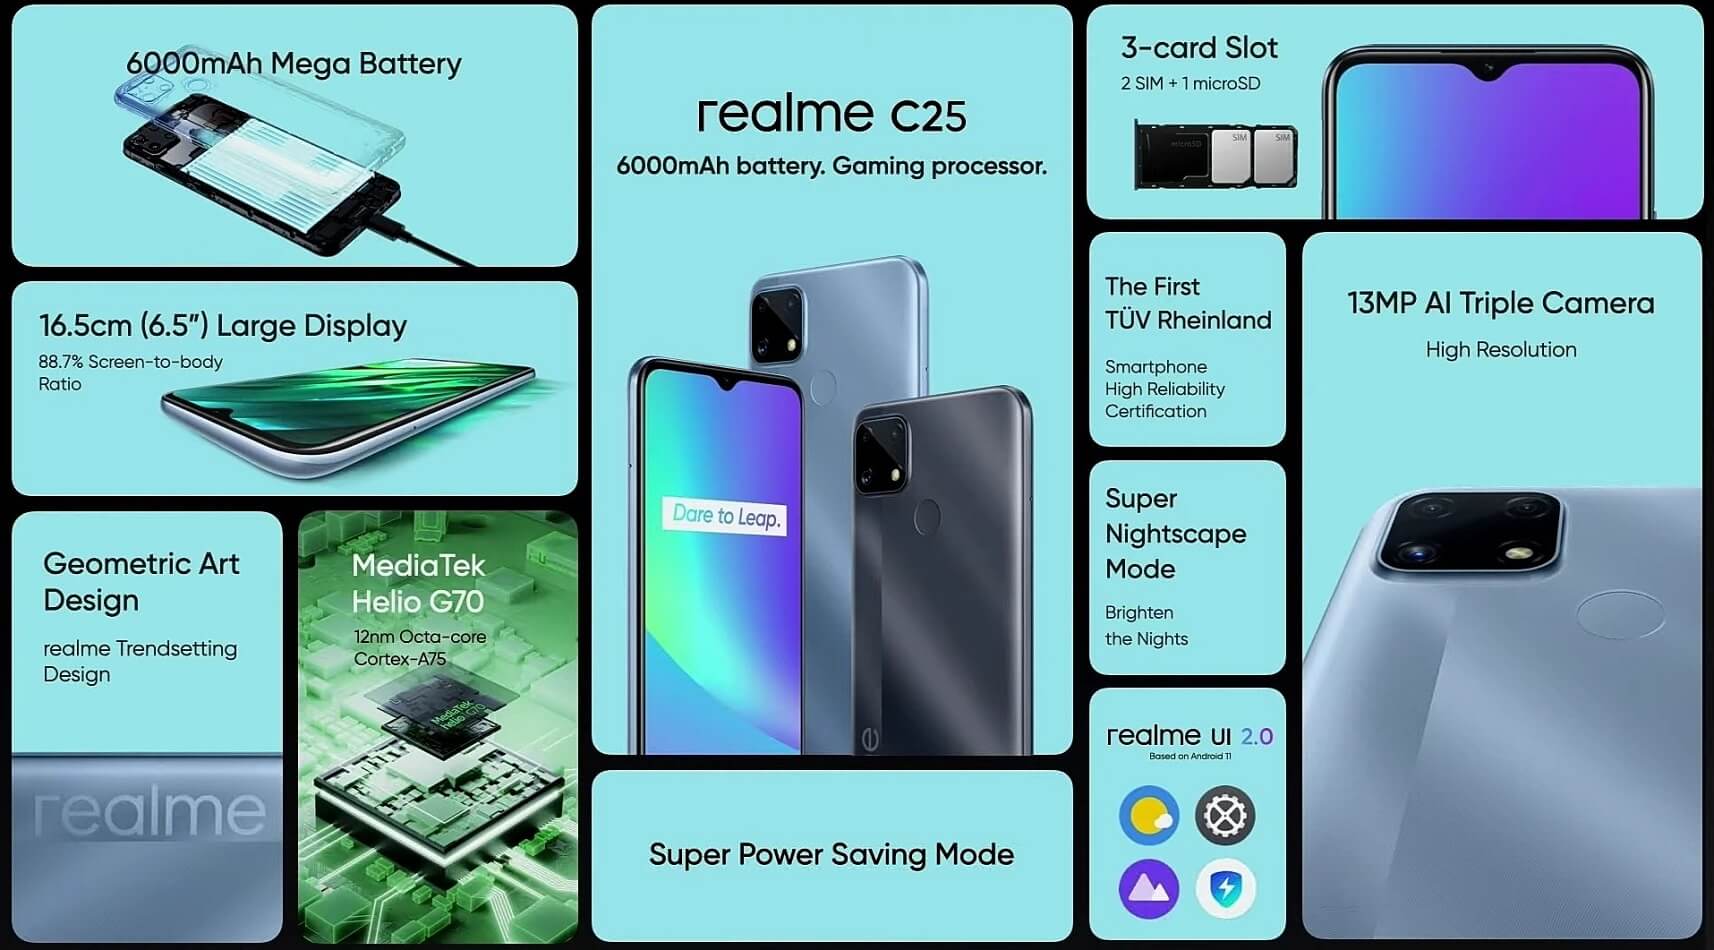 realme C25 features